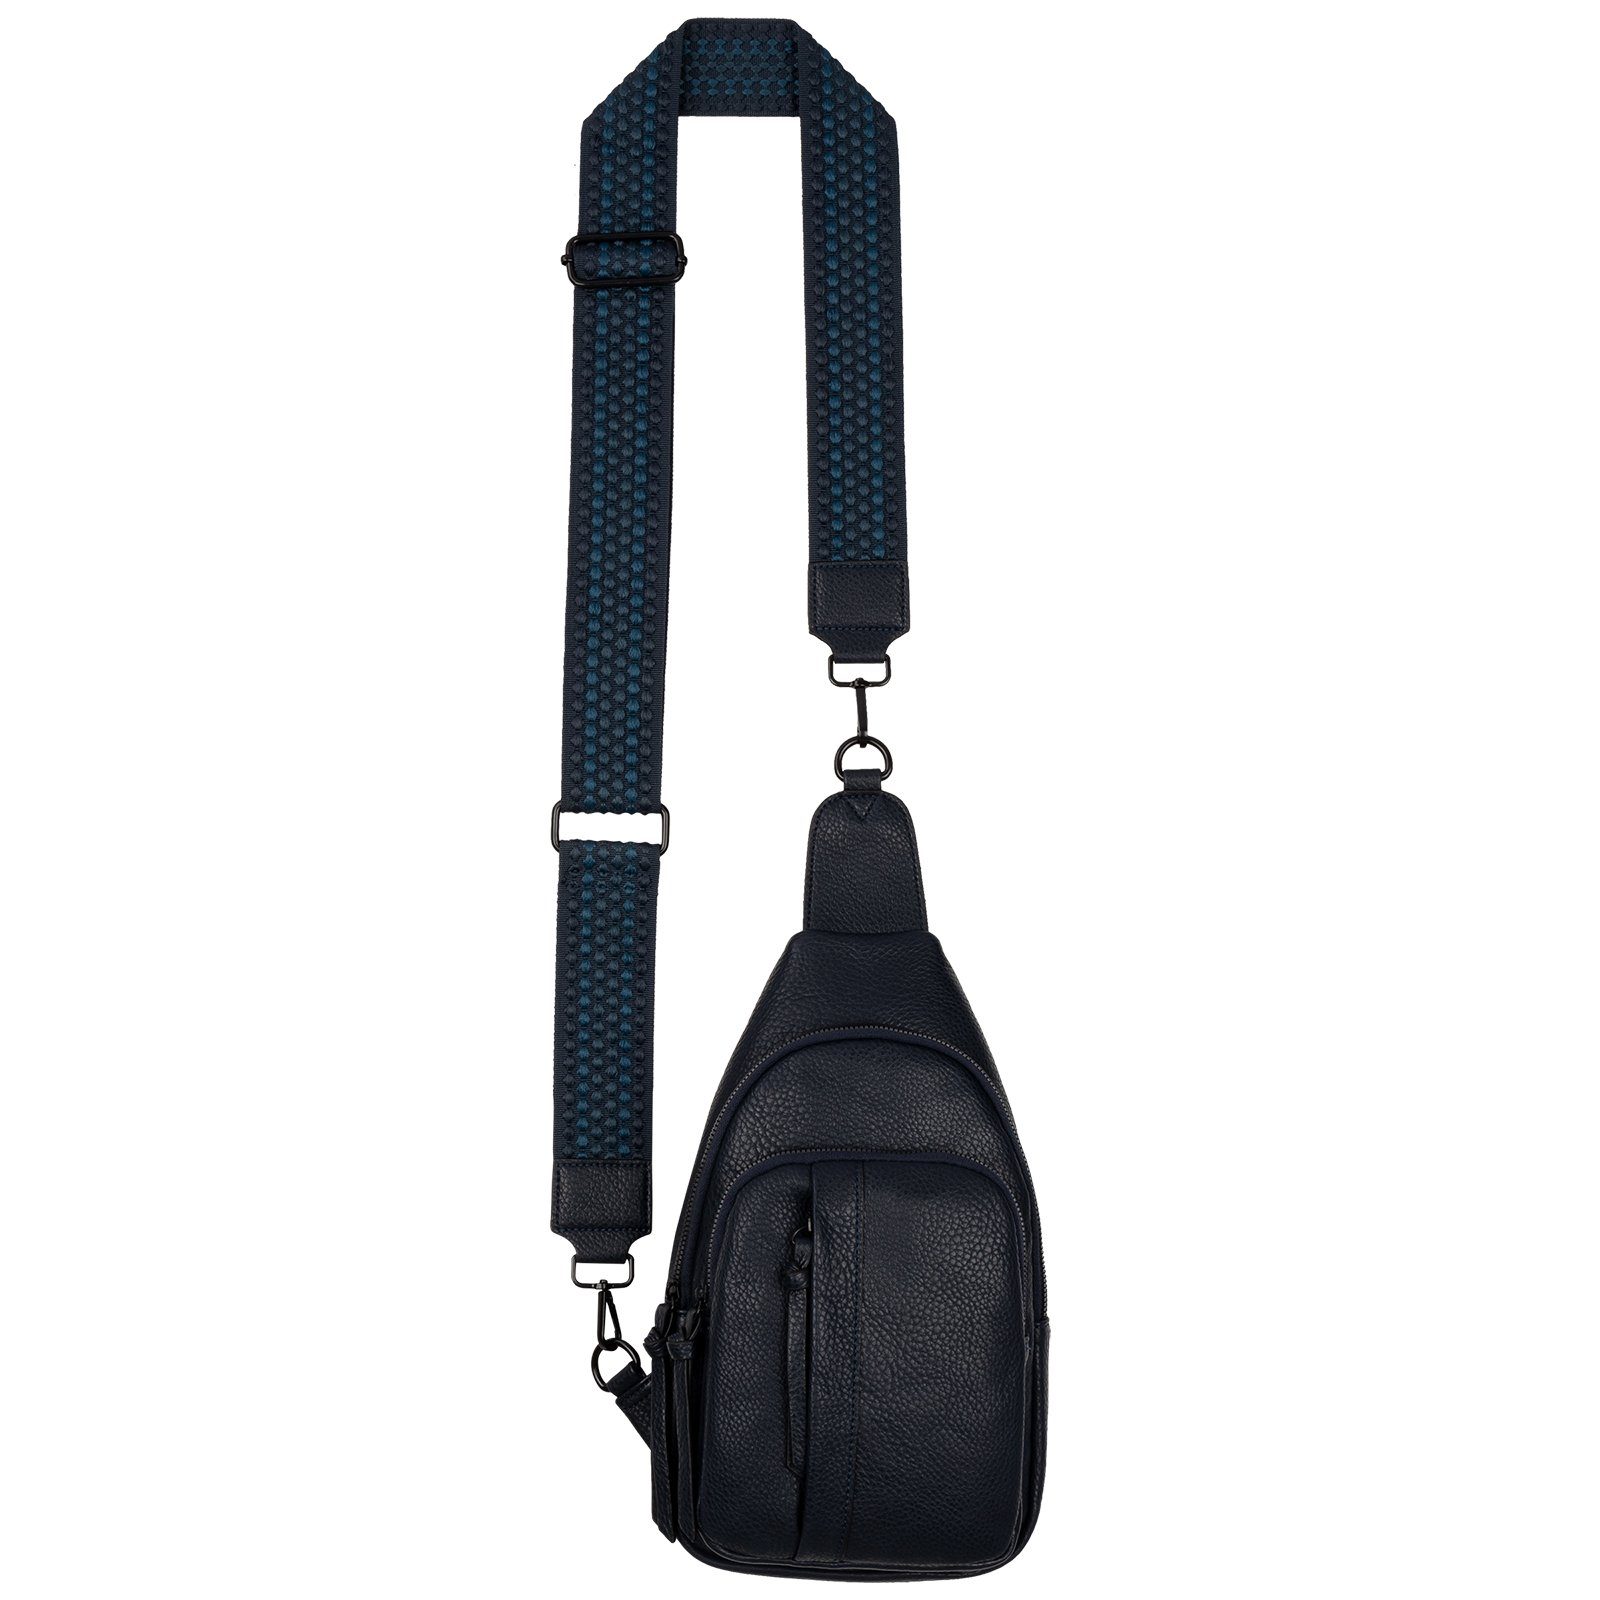 EAAKIE Umhängetasche Brusttasche Umhängetasche Schultertasche Cross Body Bag Kunstleder, als Schultertasche, CrossOver, Umhängetasche tragbar D.BLUE